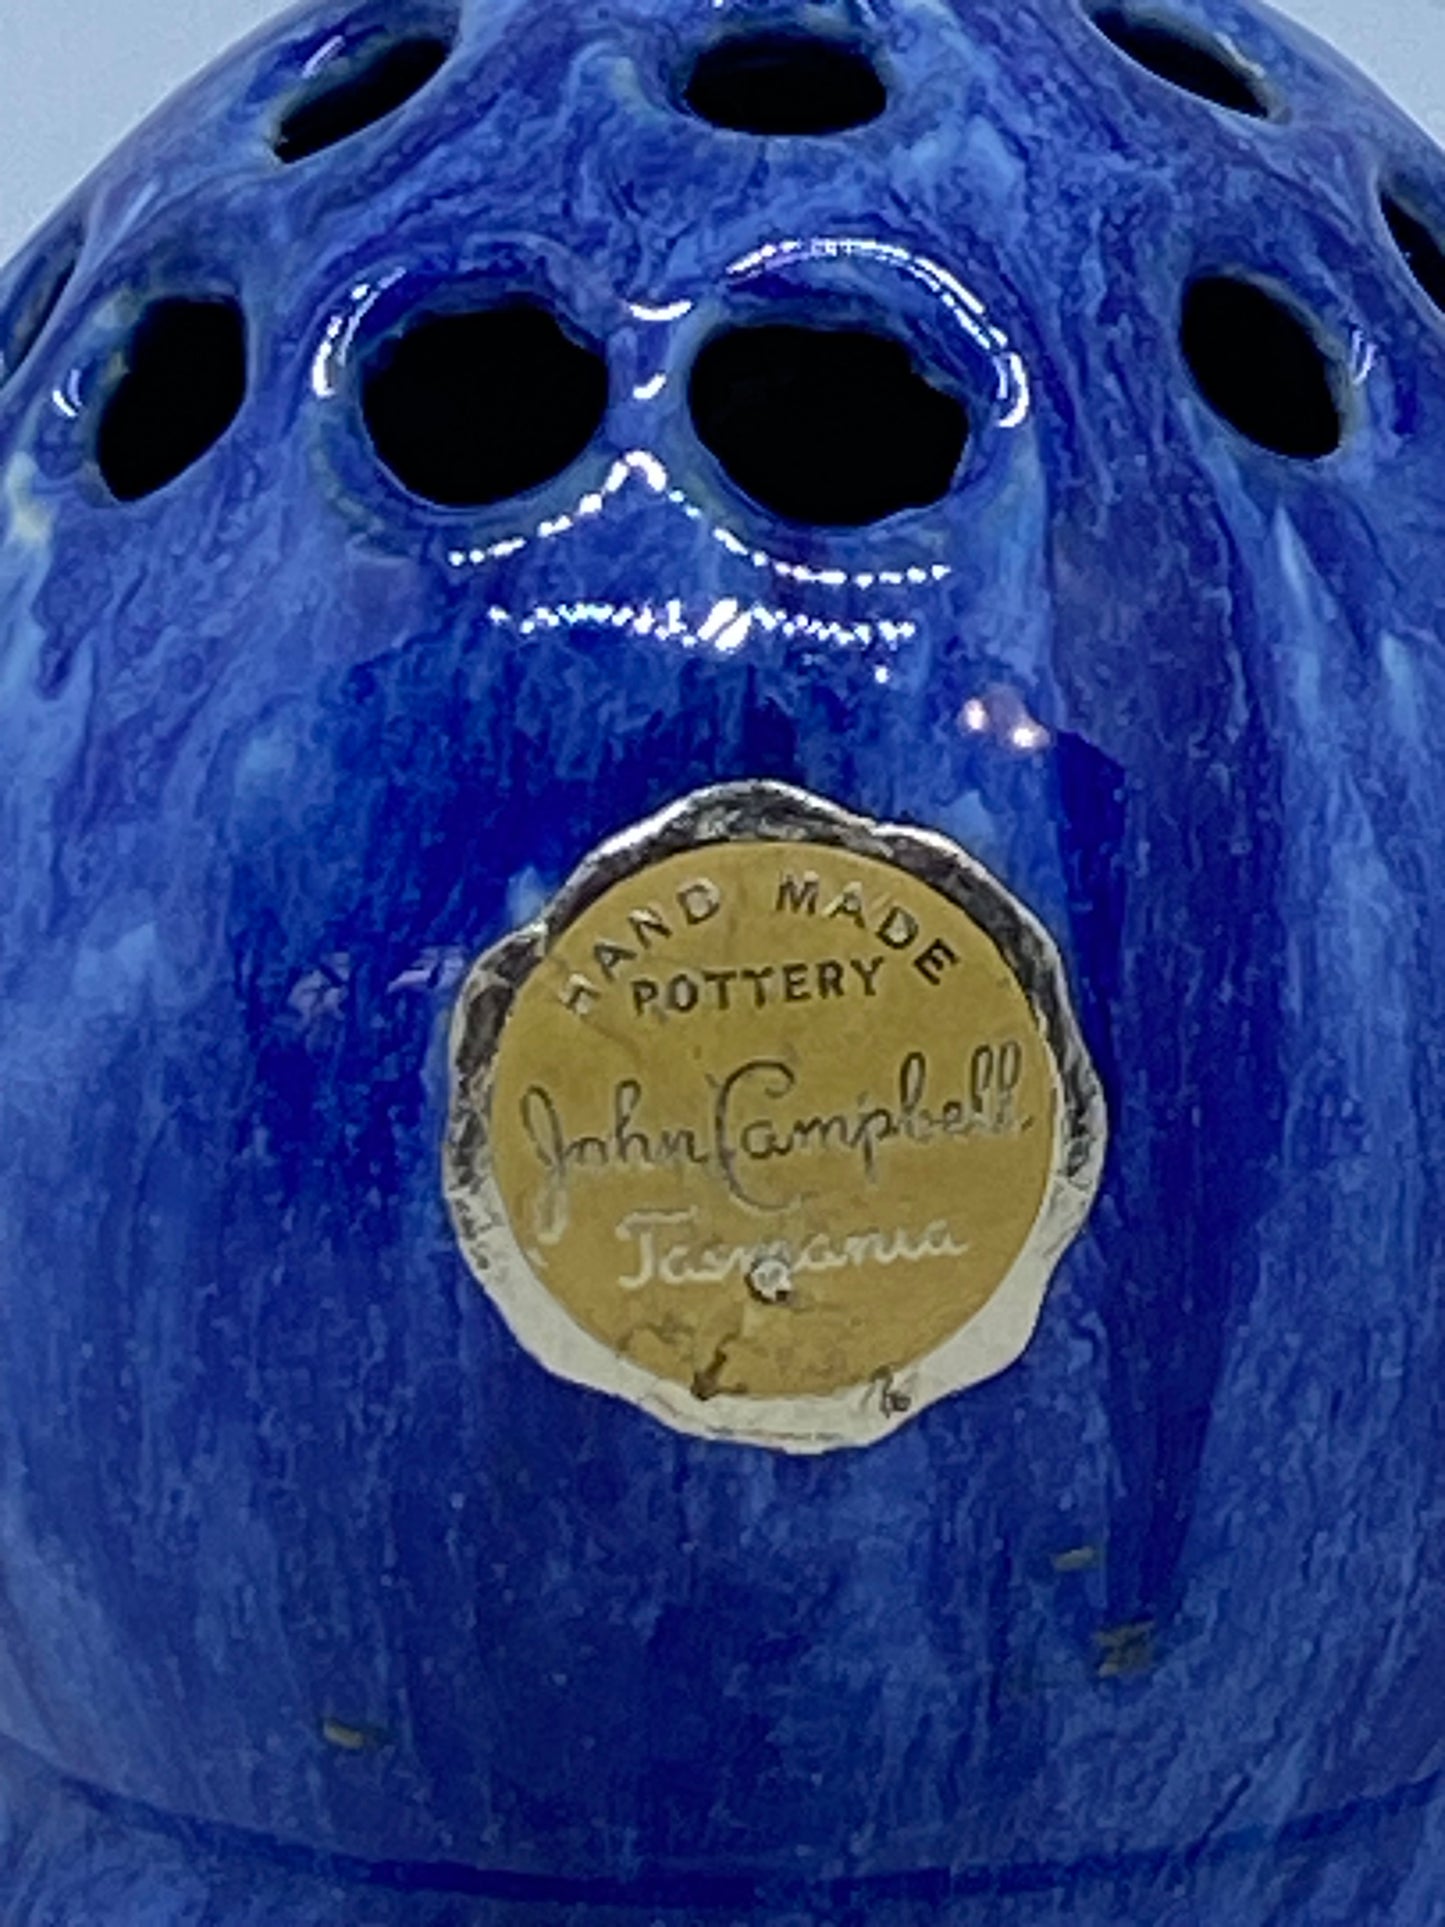 John Campbell Tasmania Shape 33 Ball Vase with Original Sticker